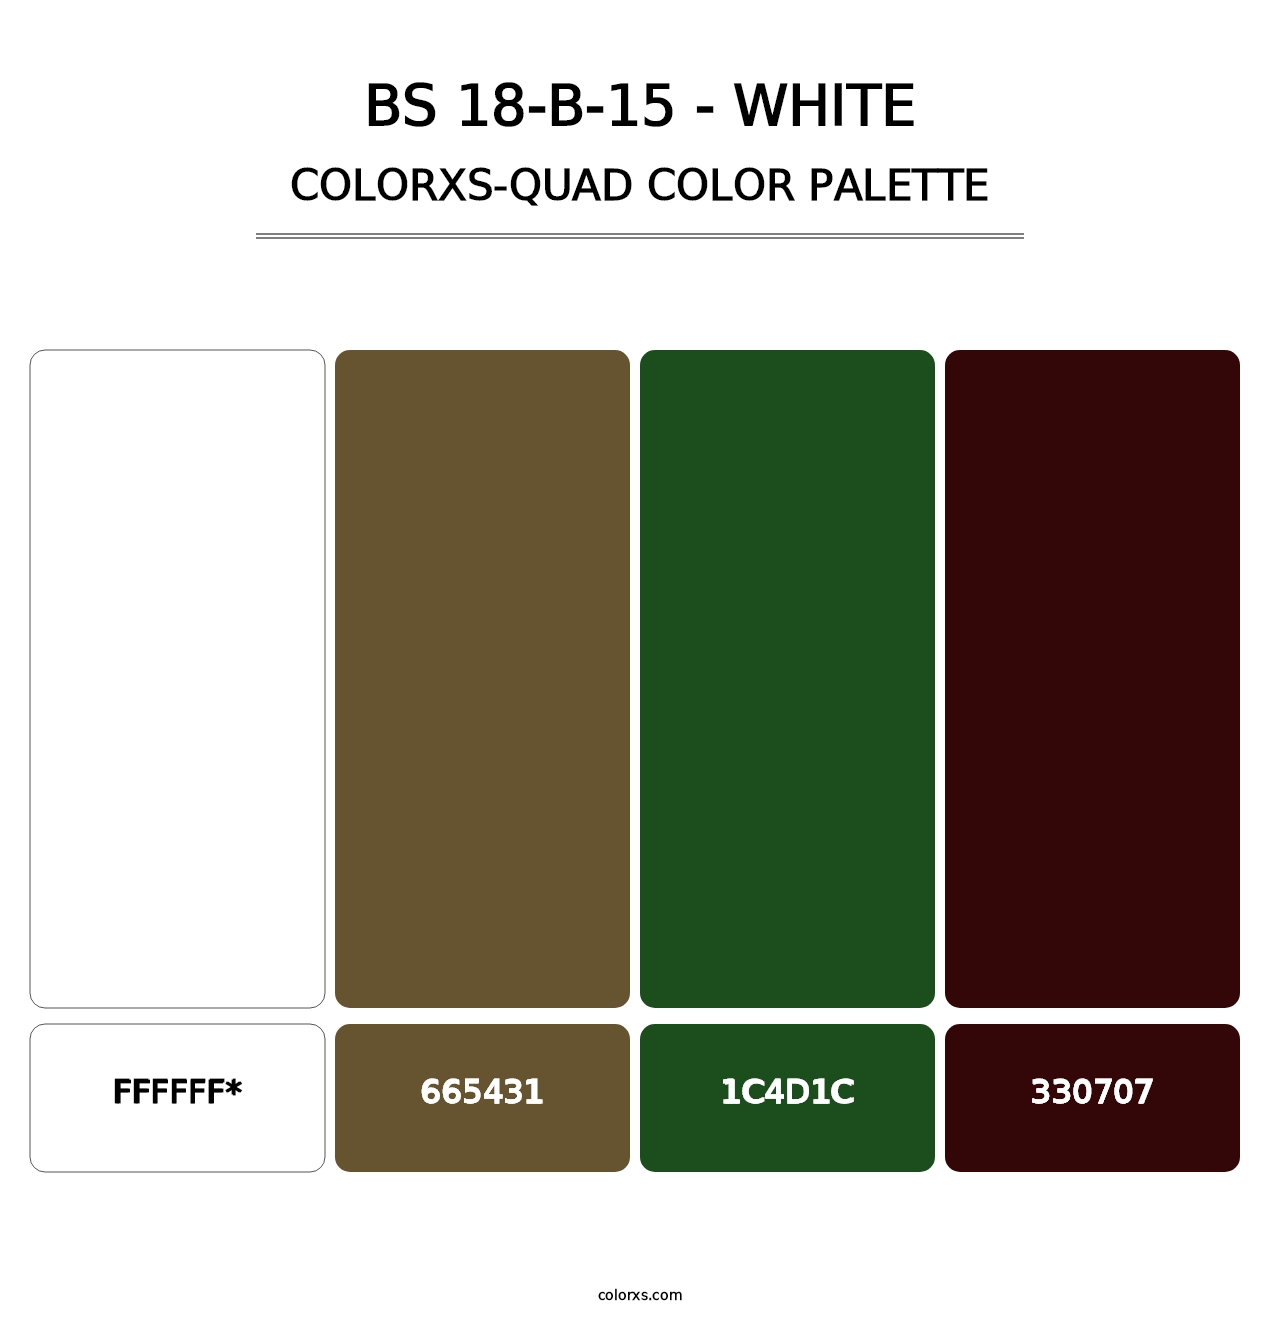 BS 18-B-15 - White - Colorxs Quad Palette